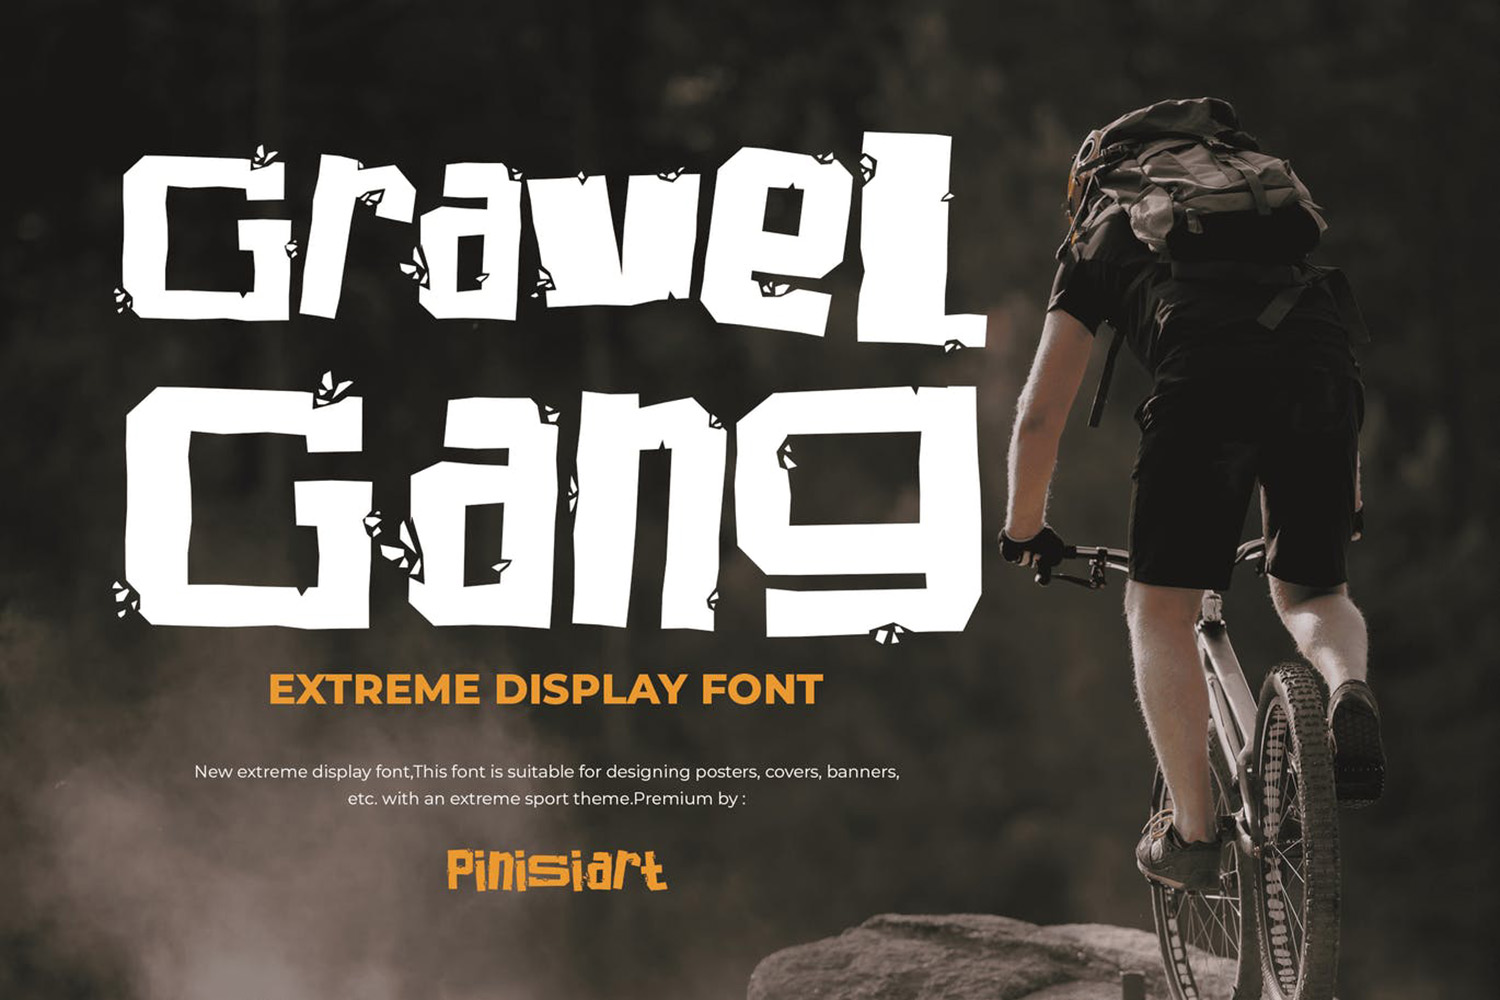 Gravel Gang Free Font